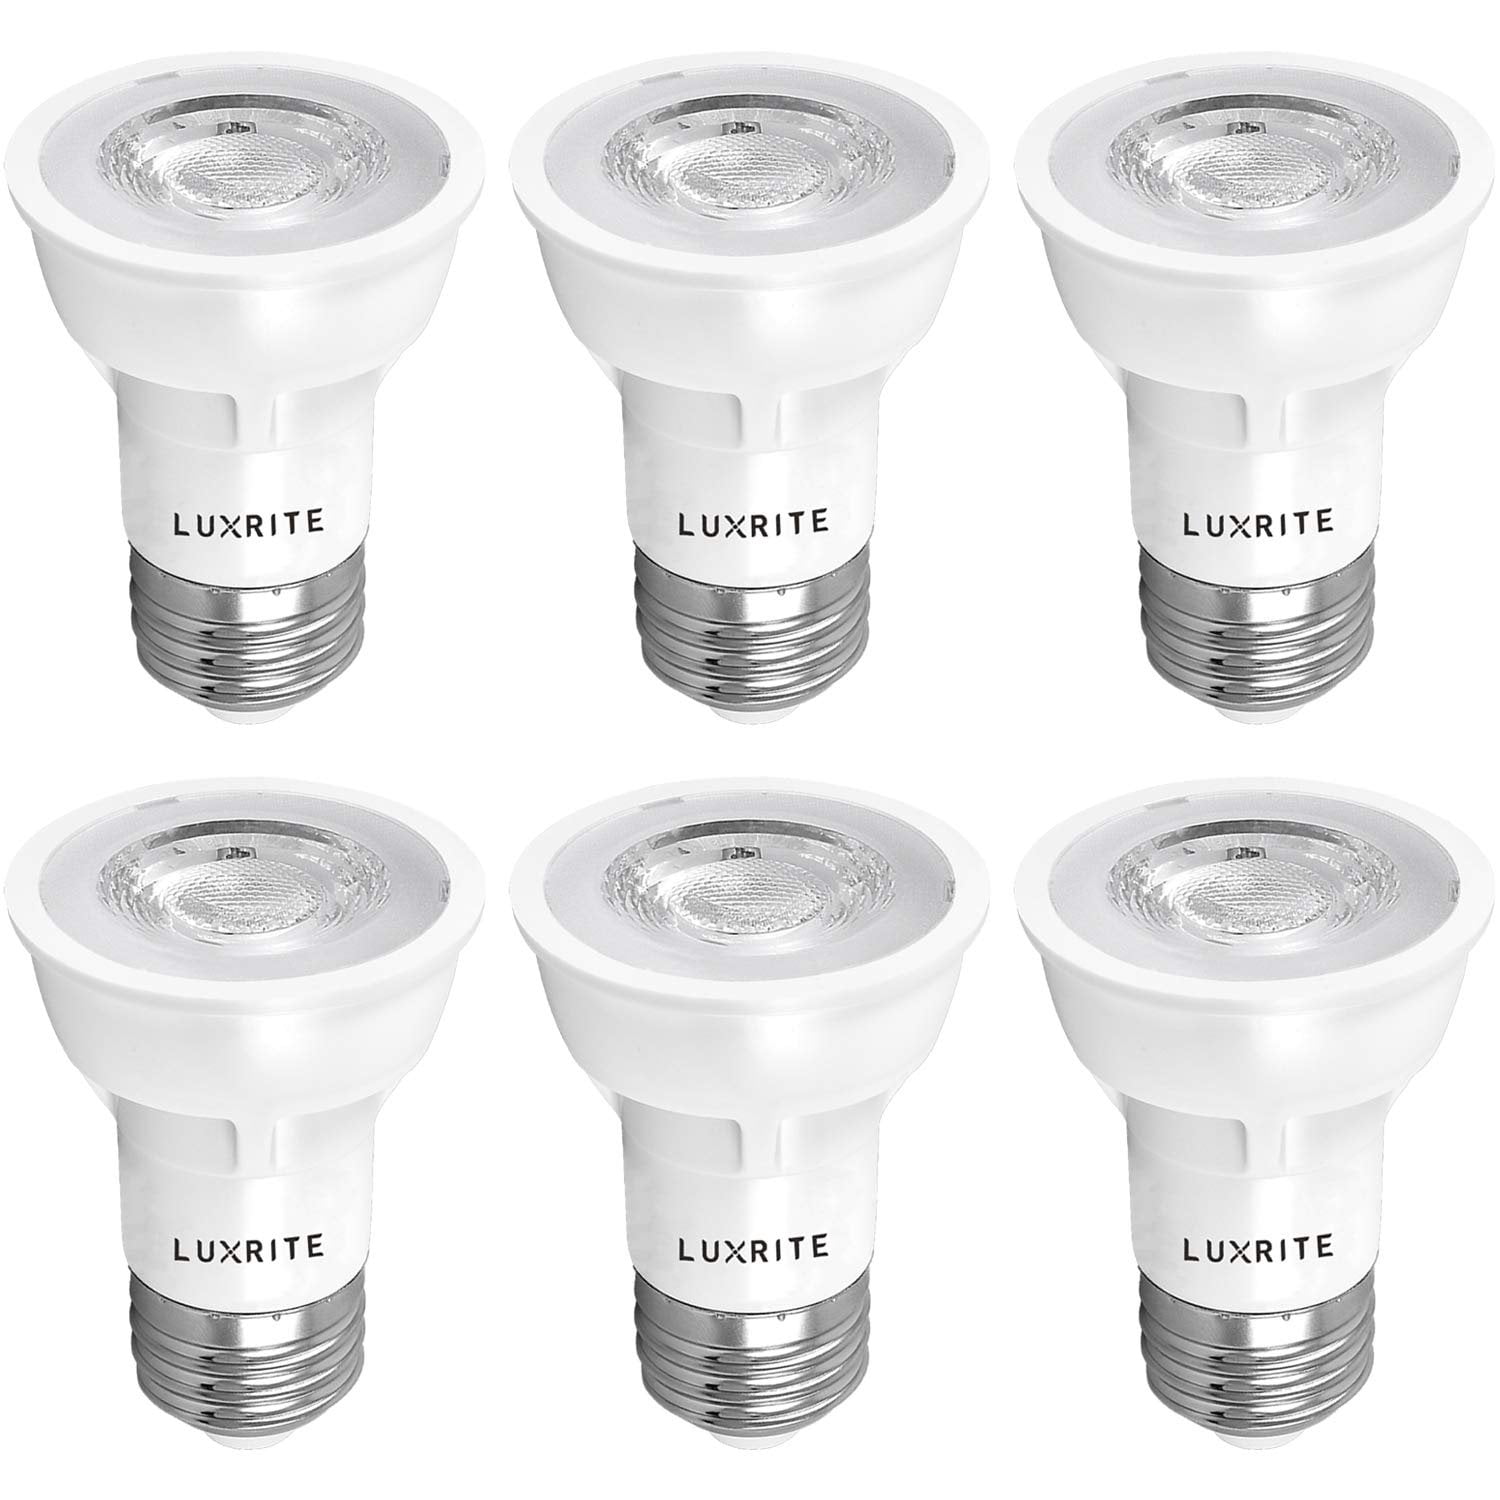 Show Minimal Humiliate Luxrite PAR16 LED Dimmable Spot Light Bulb, 5.5W (50W Equivalent) 5000K  Bright White, 450 Lumens, E26, 6 Pack - Walmart.com